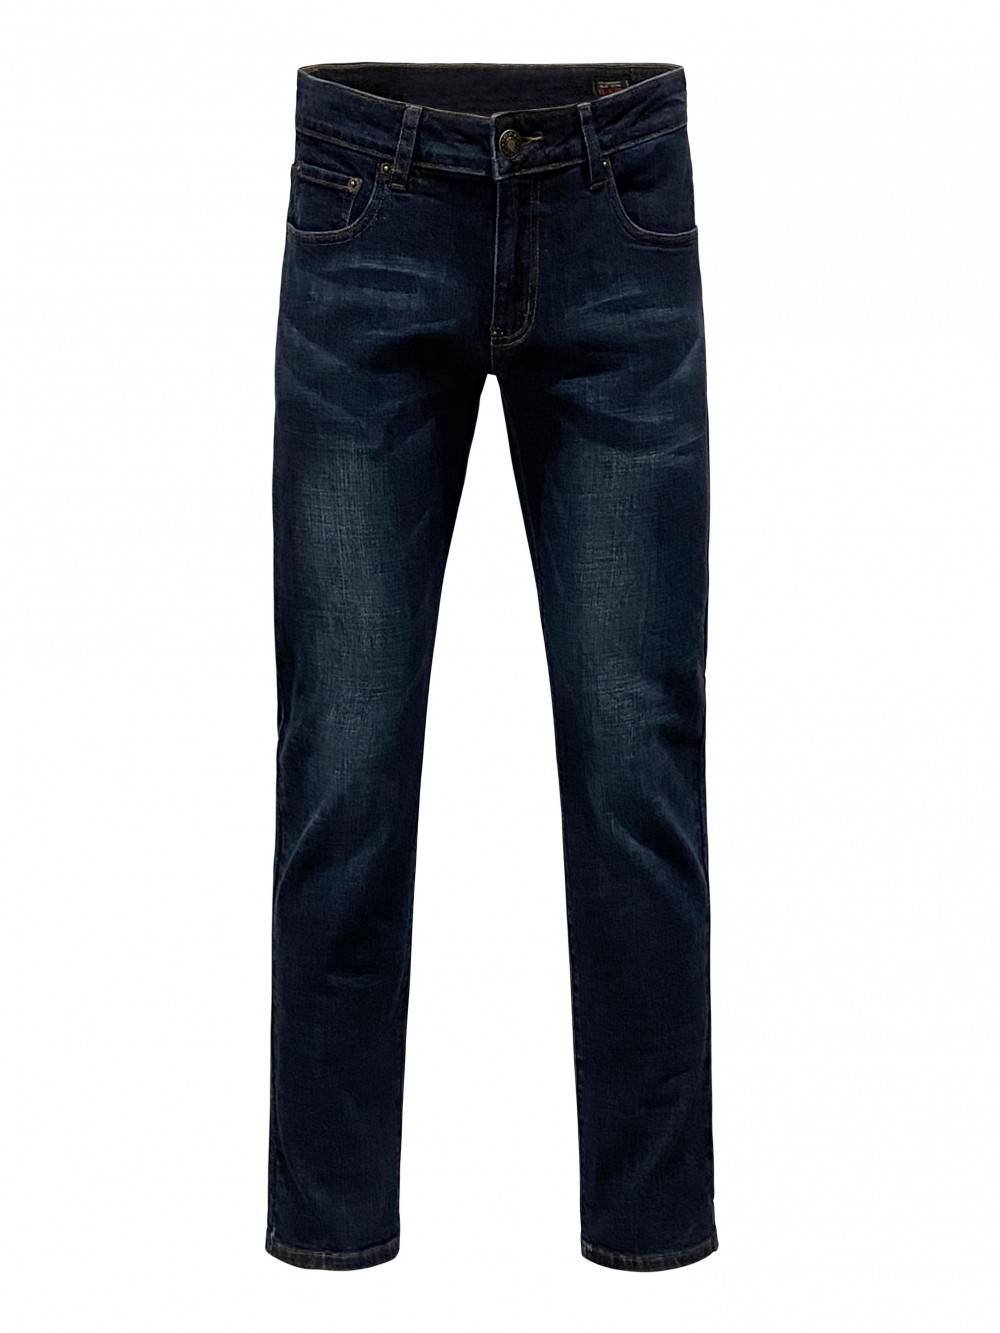 Jeans JSM312 stretch slim fit - dr.blue